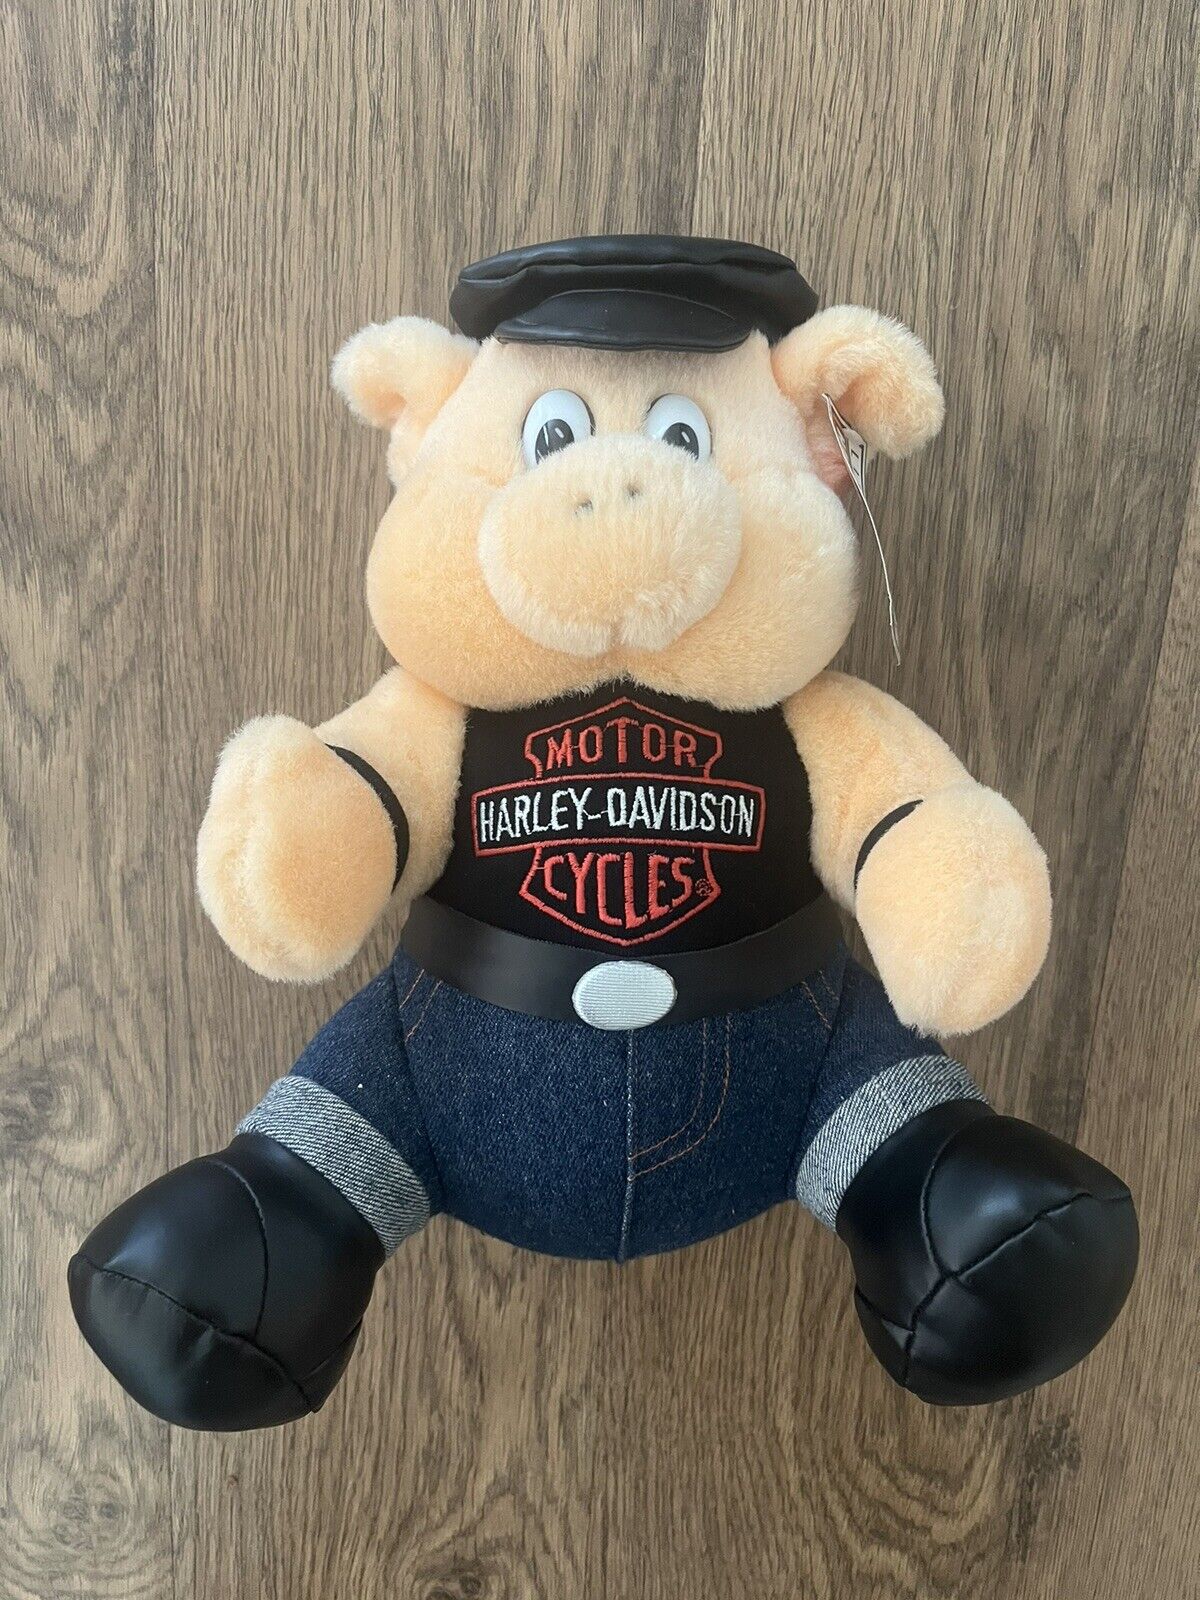 Harley Davidson Plush Pig Hog Stuffed Animal Toy Biker Motorcycles HD 1998